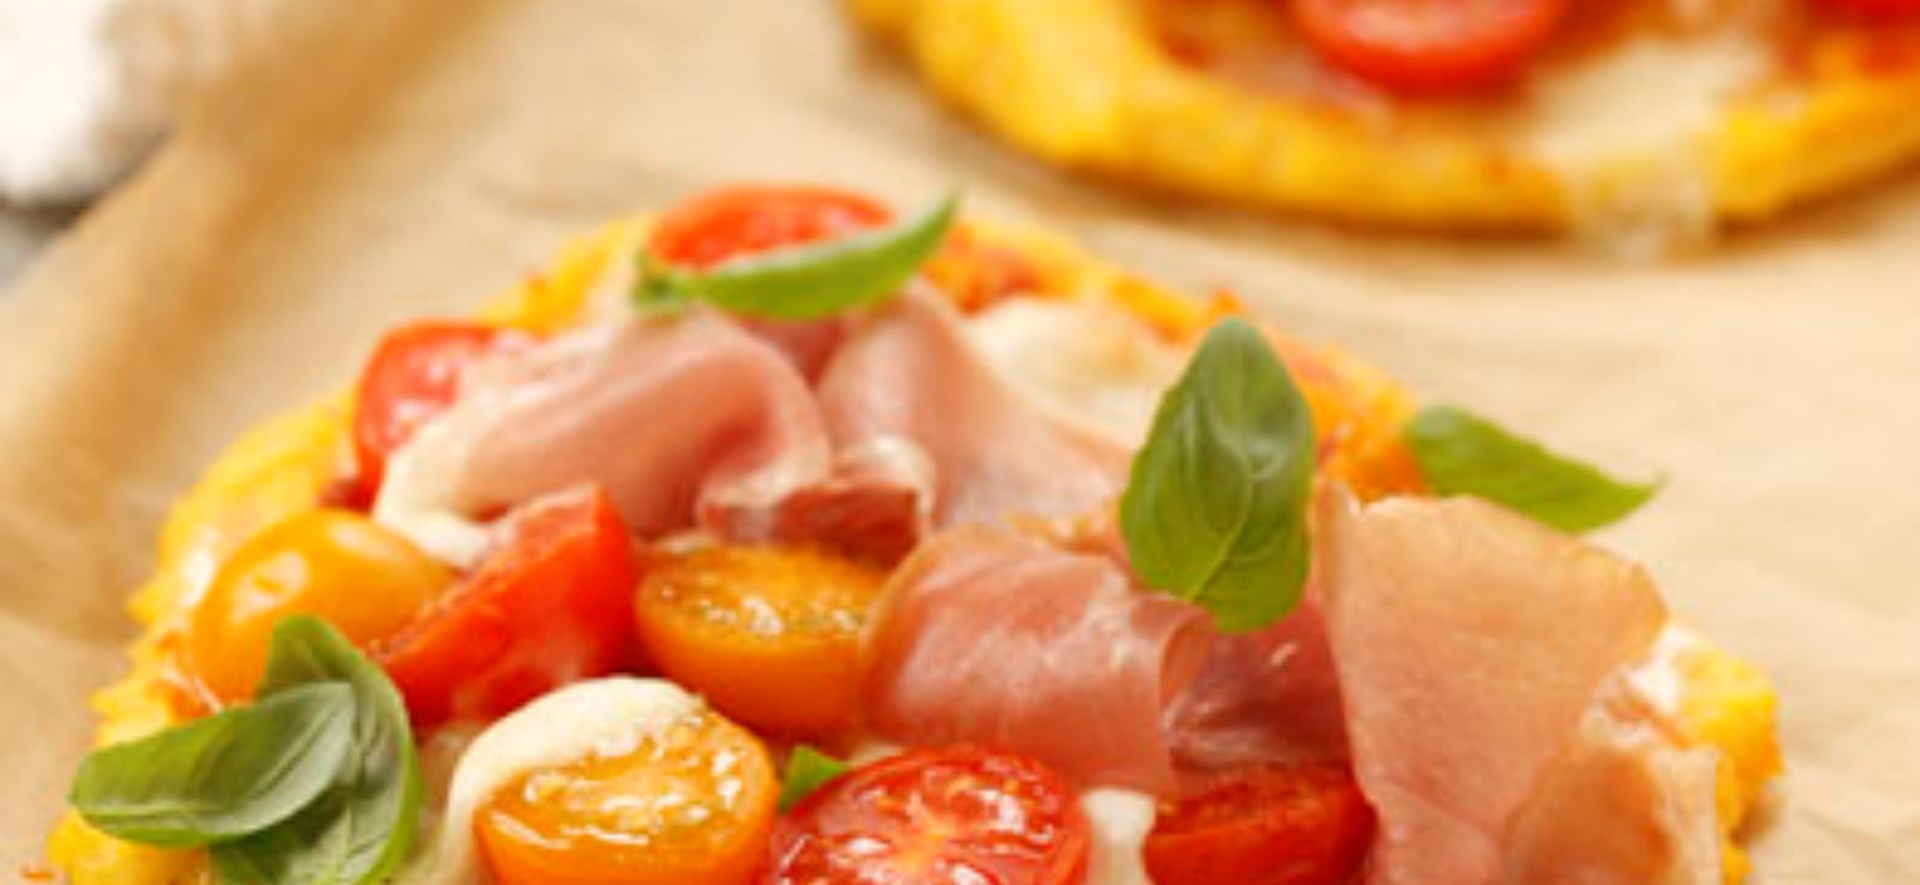 Bild zu Polentapizza mit Büffelmozzarella und Prosciutto